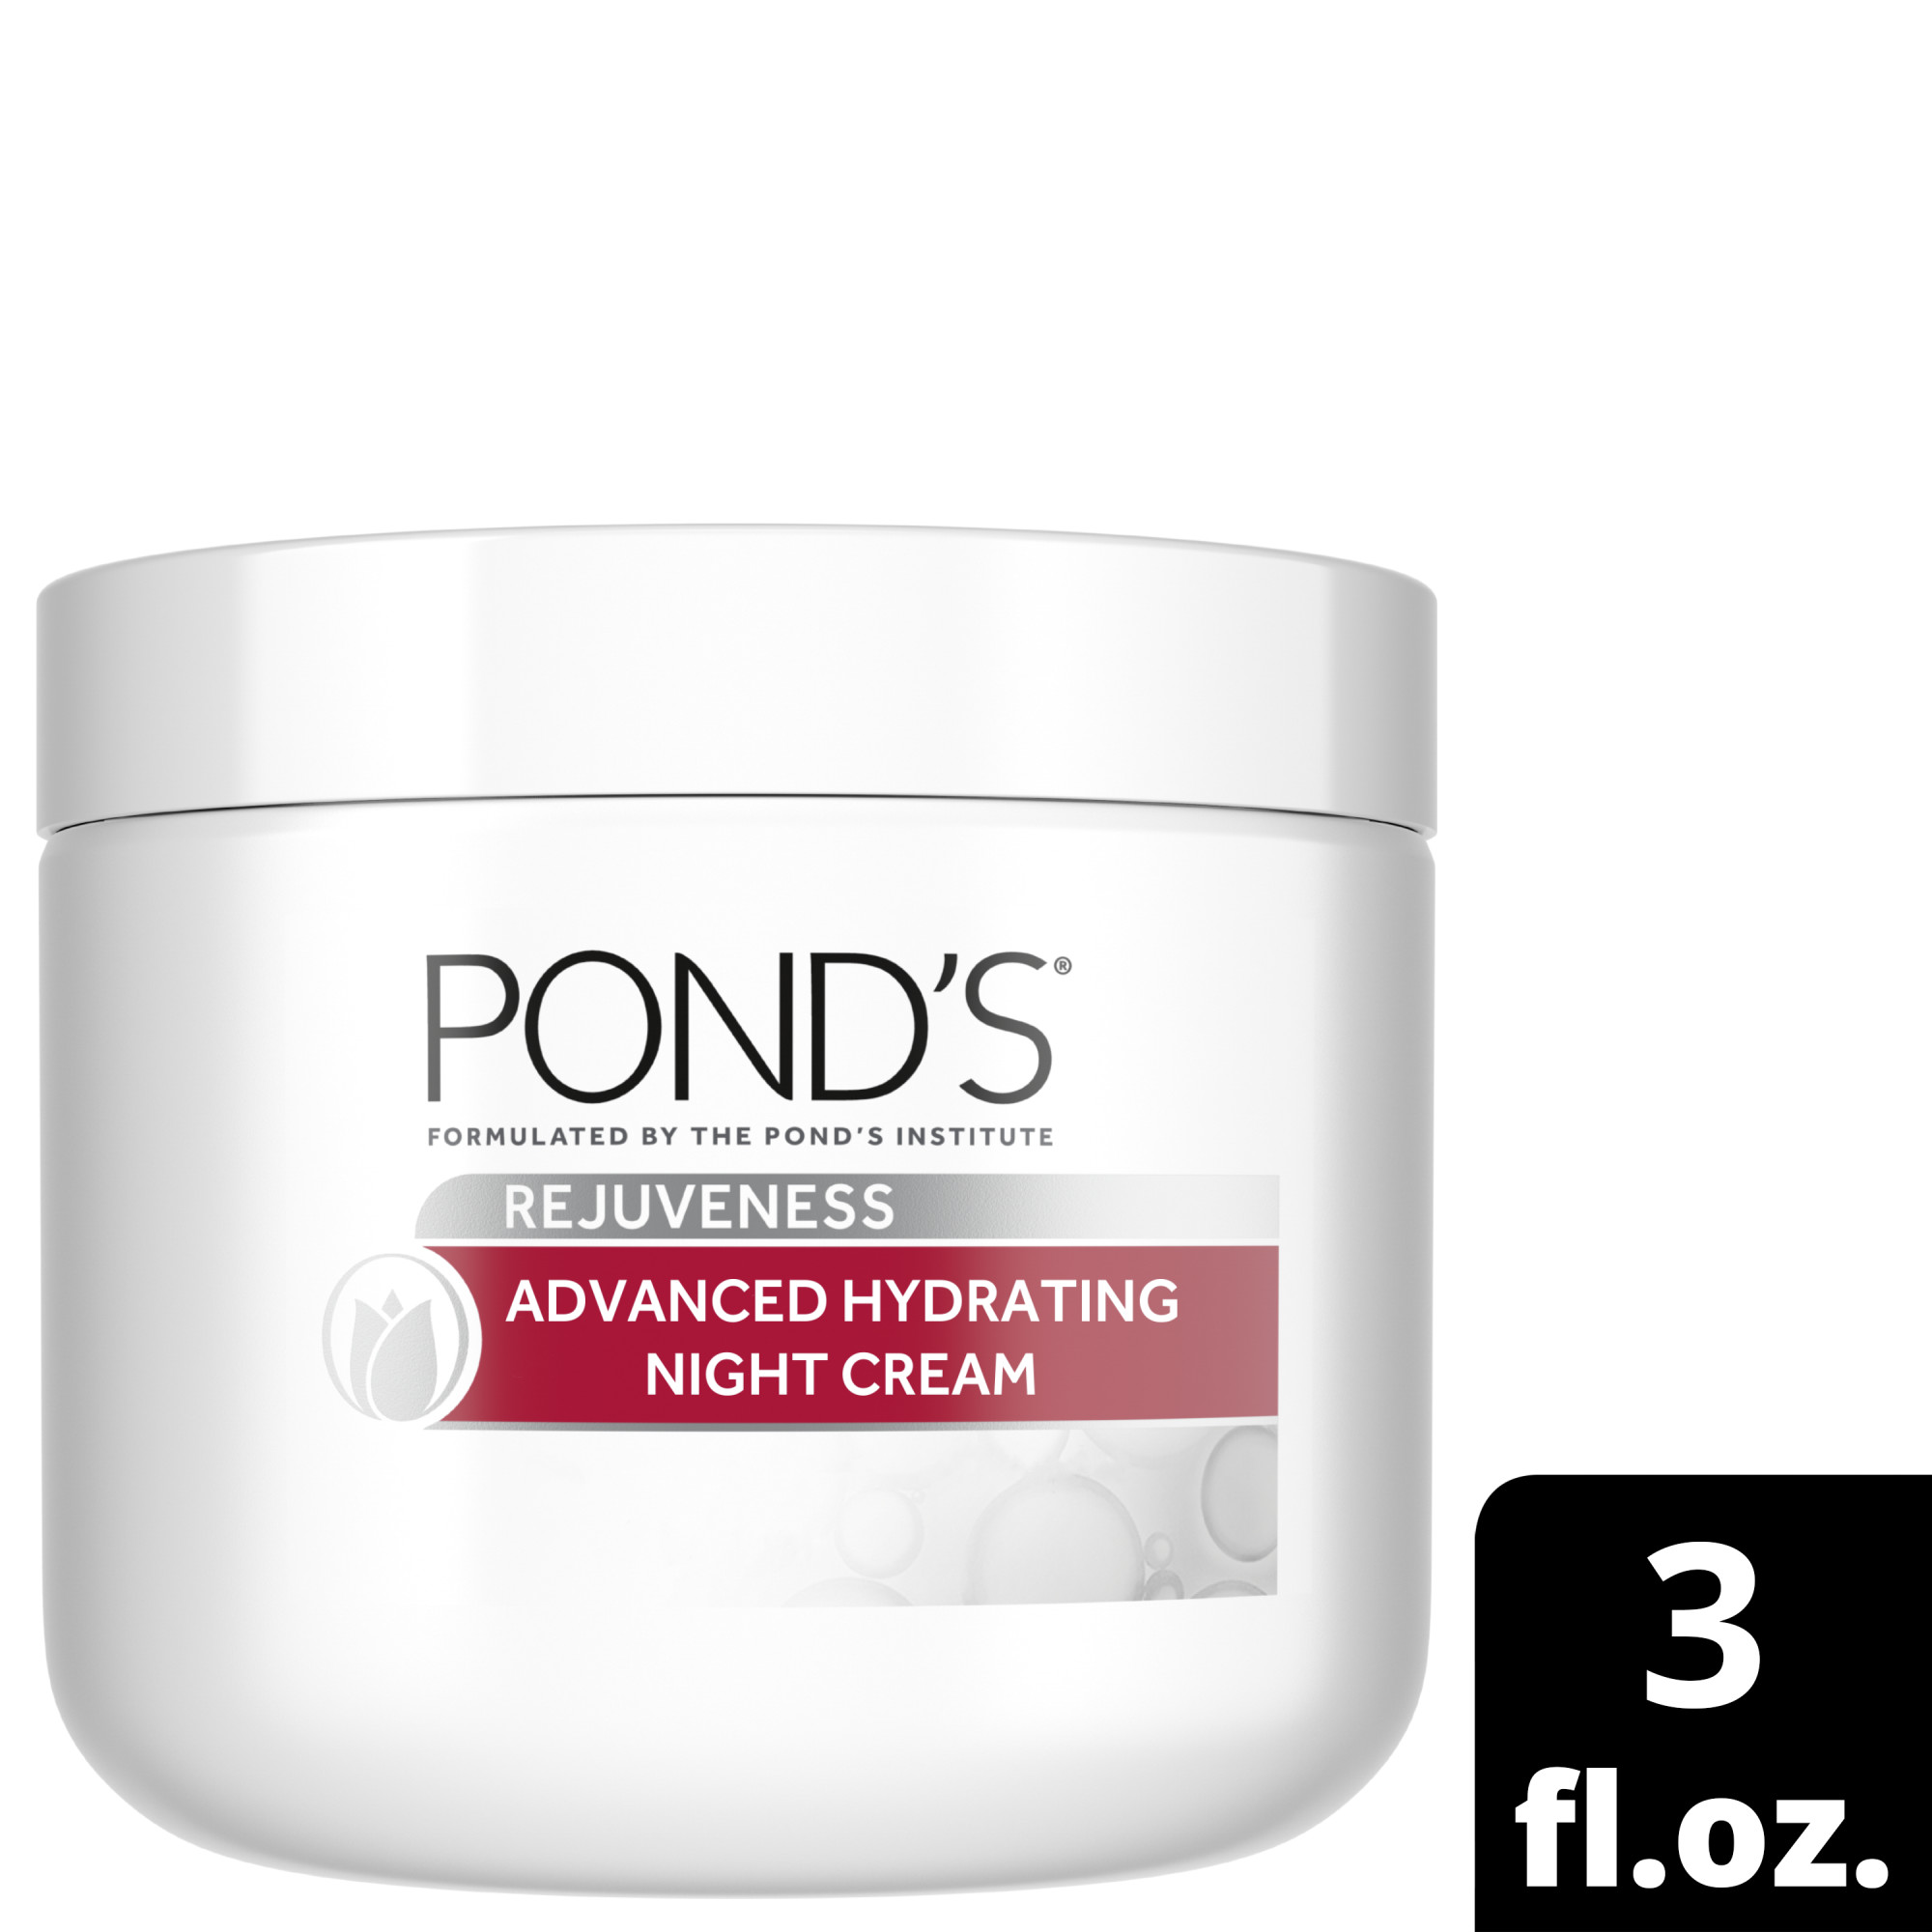 Pond's Night Cream Rejuveness, 3 OZ - image 1 of 3